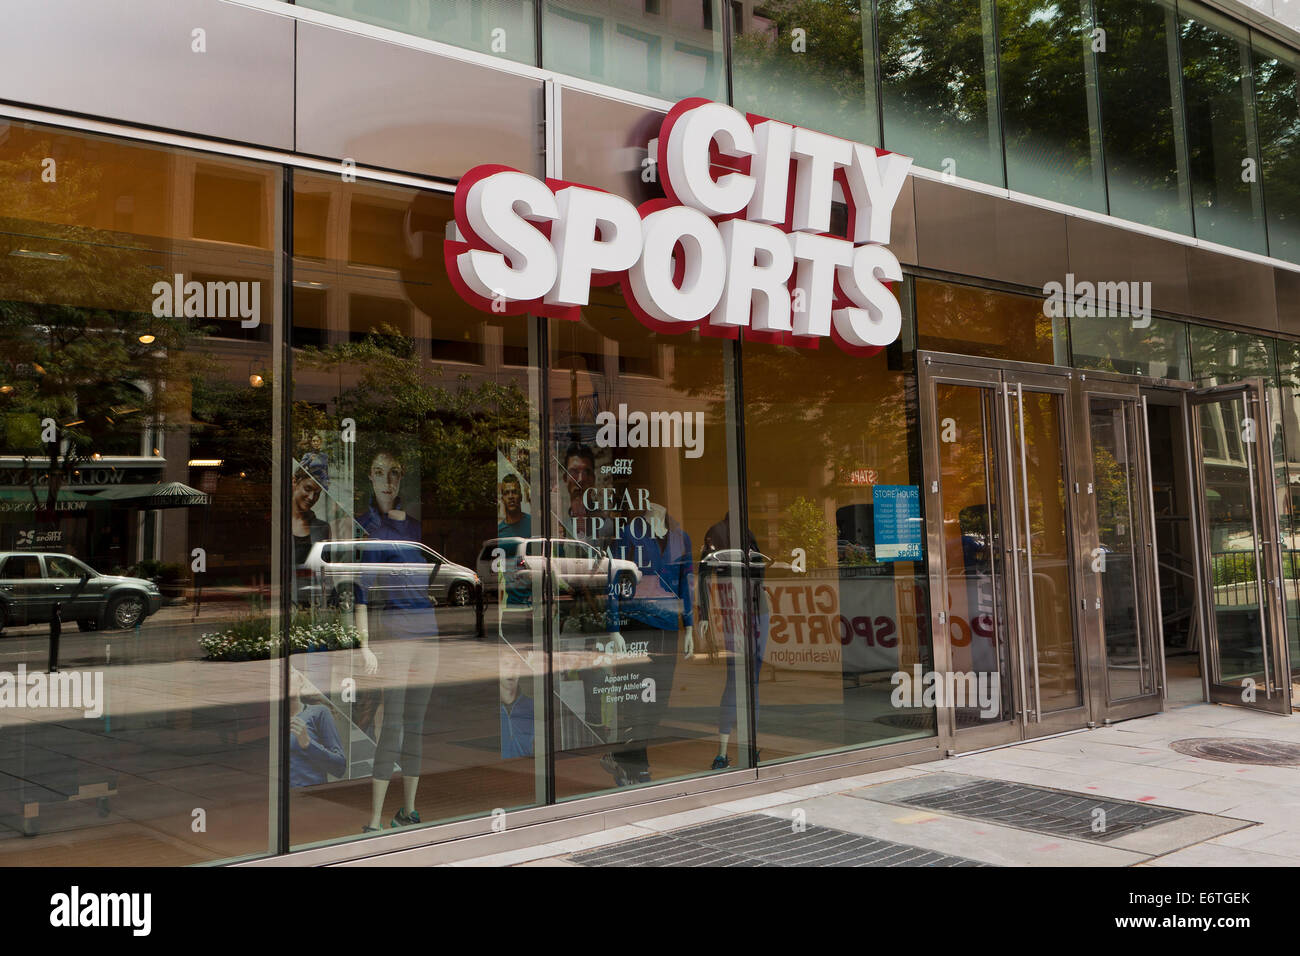 City Sports storefront - Washington, DC USA Stock Photo - Alamy